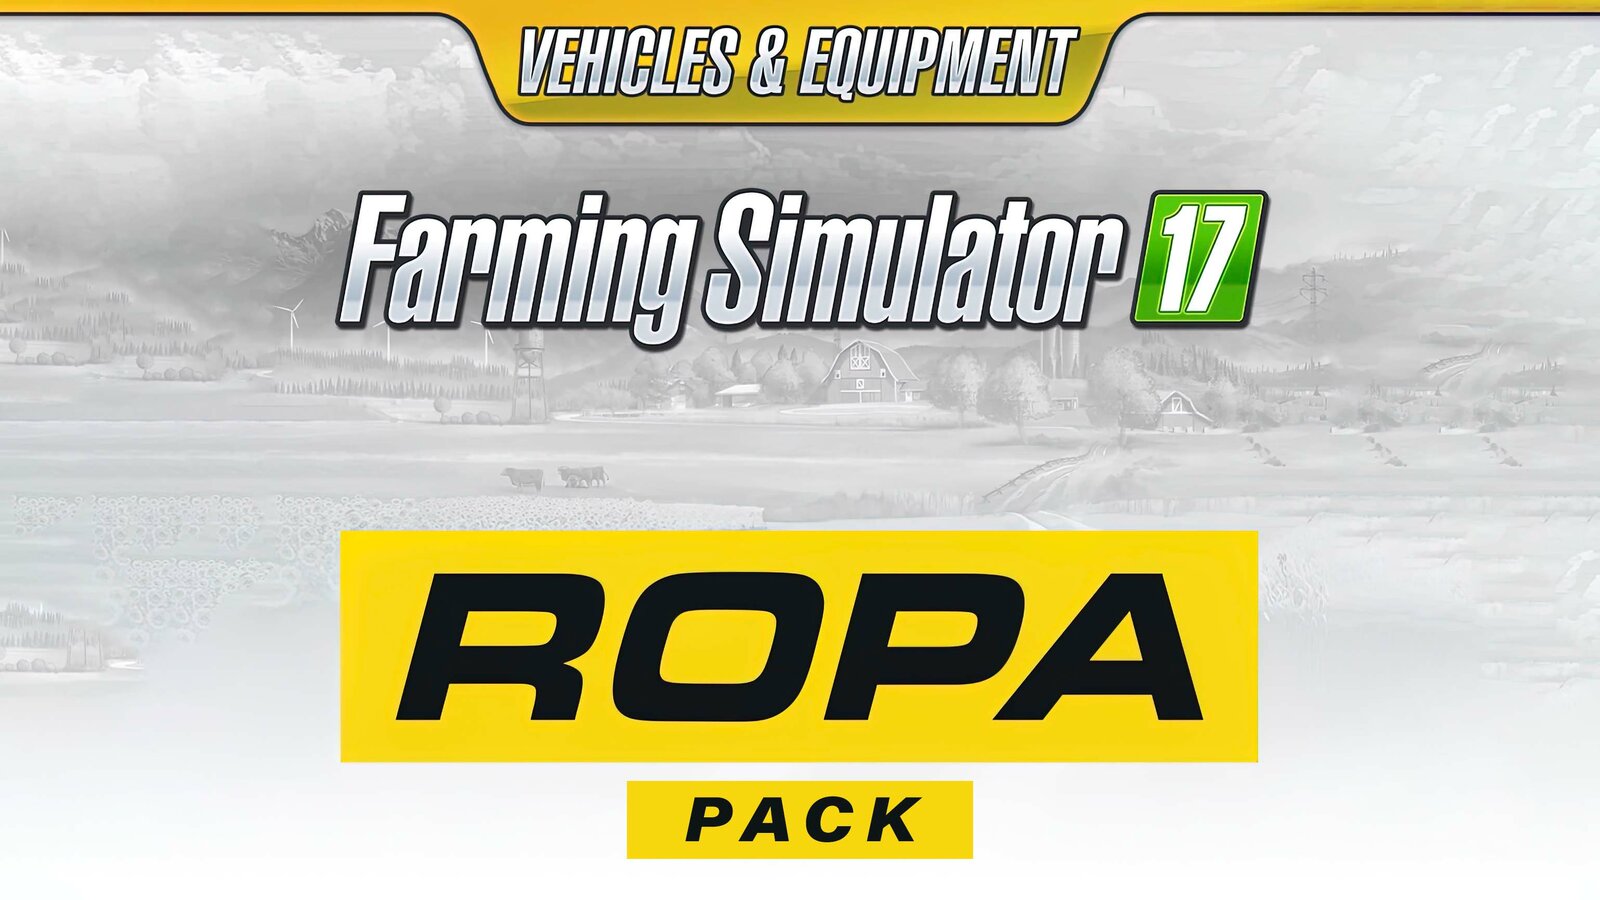 Farming Simulator 17 - ROPA Pack